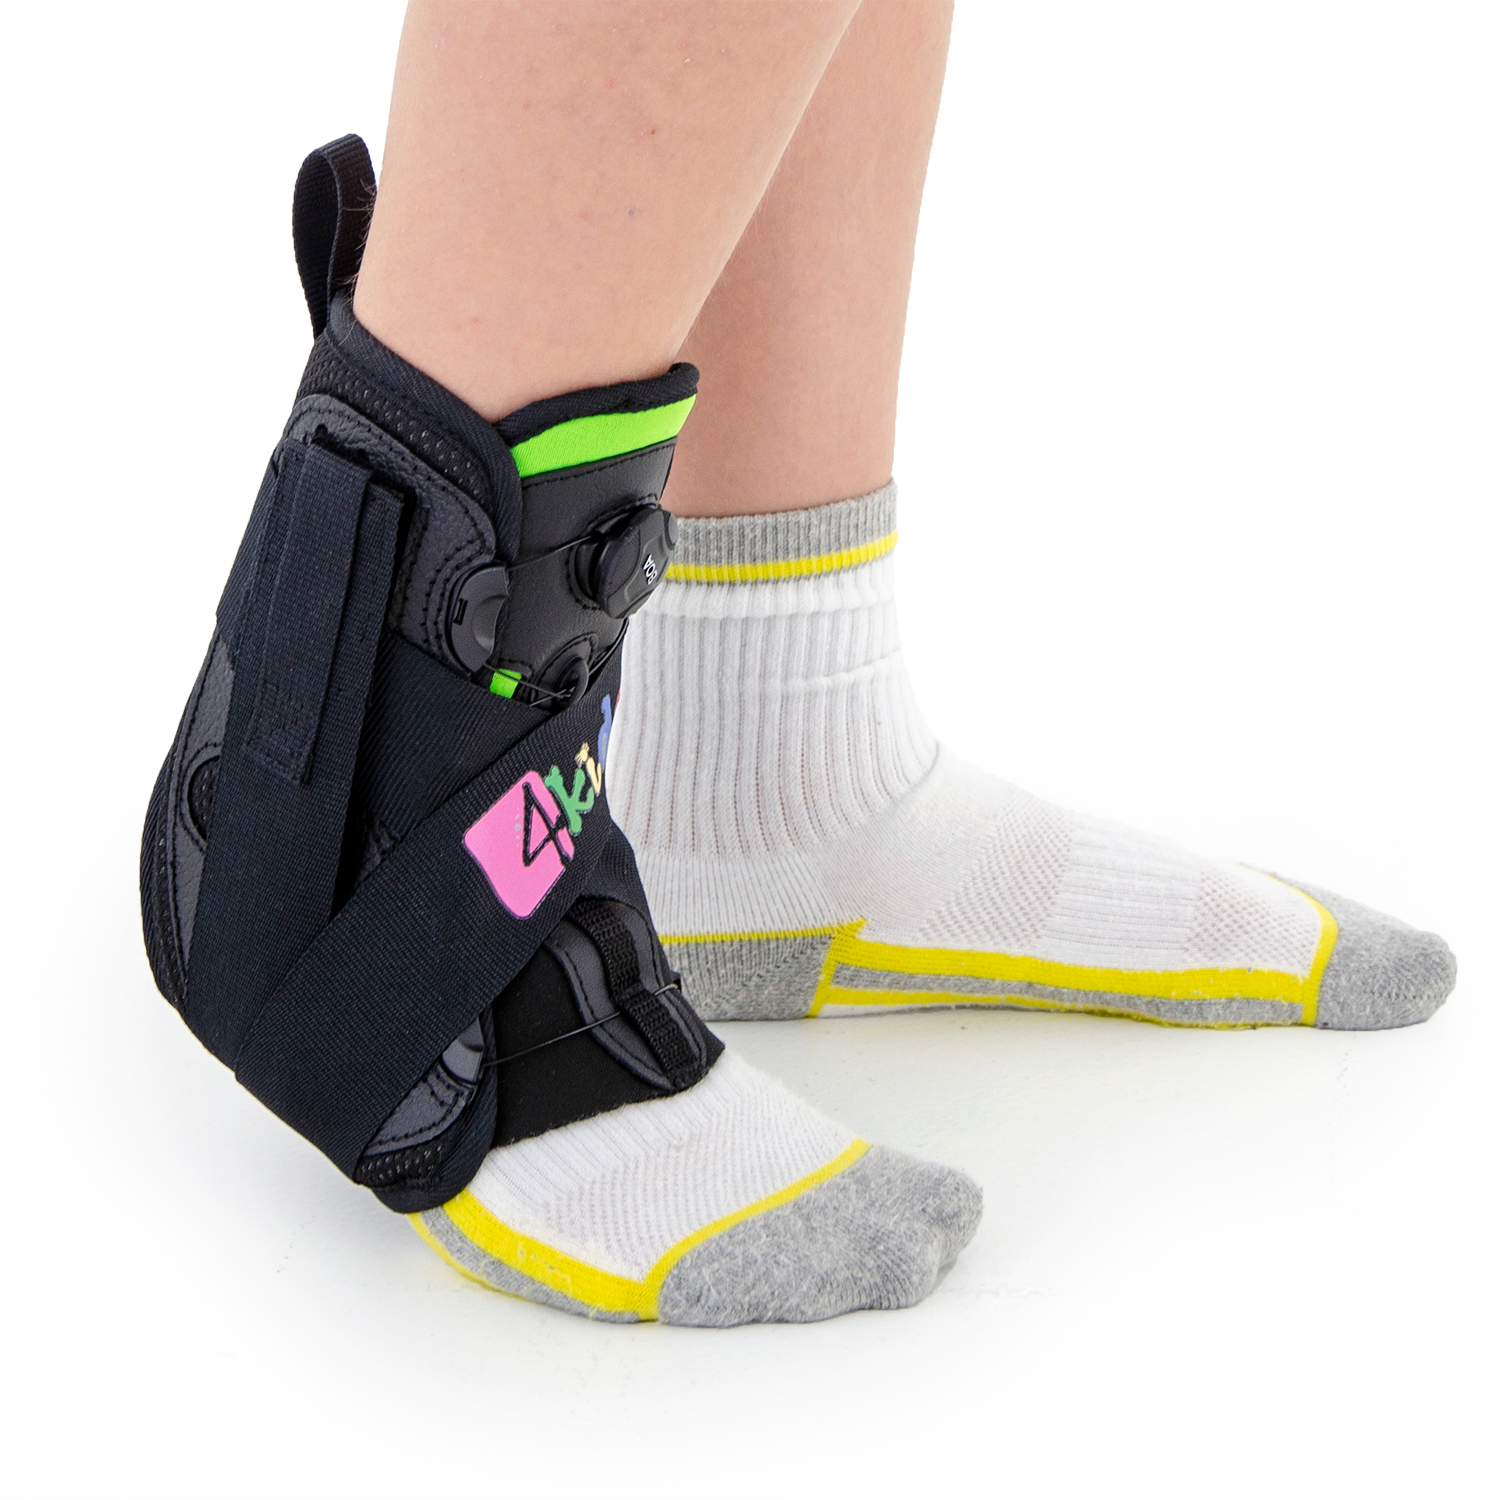 Foot & Ankle Splints & Braces, Orthopedic Ankle Braces